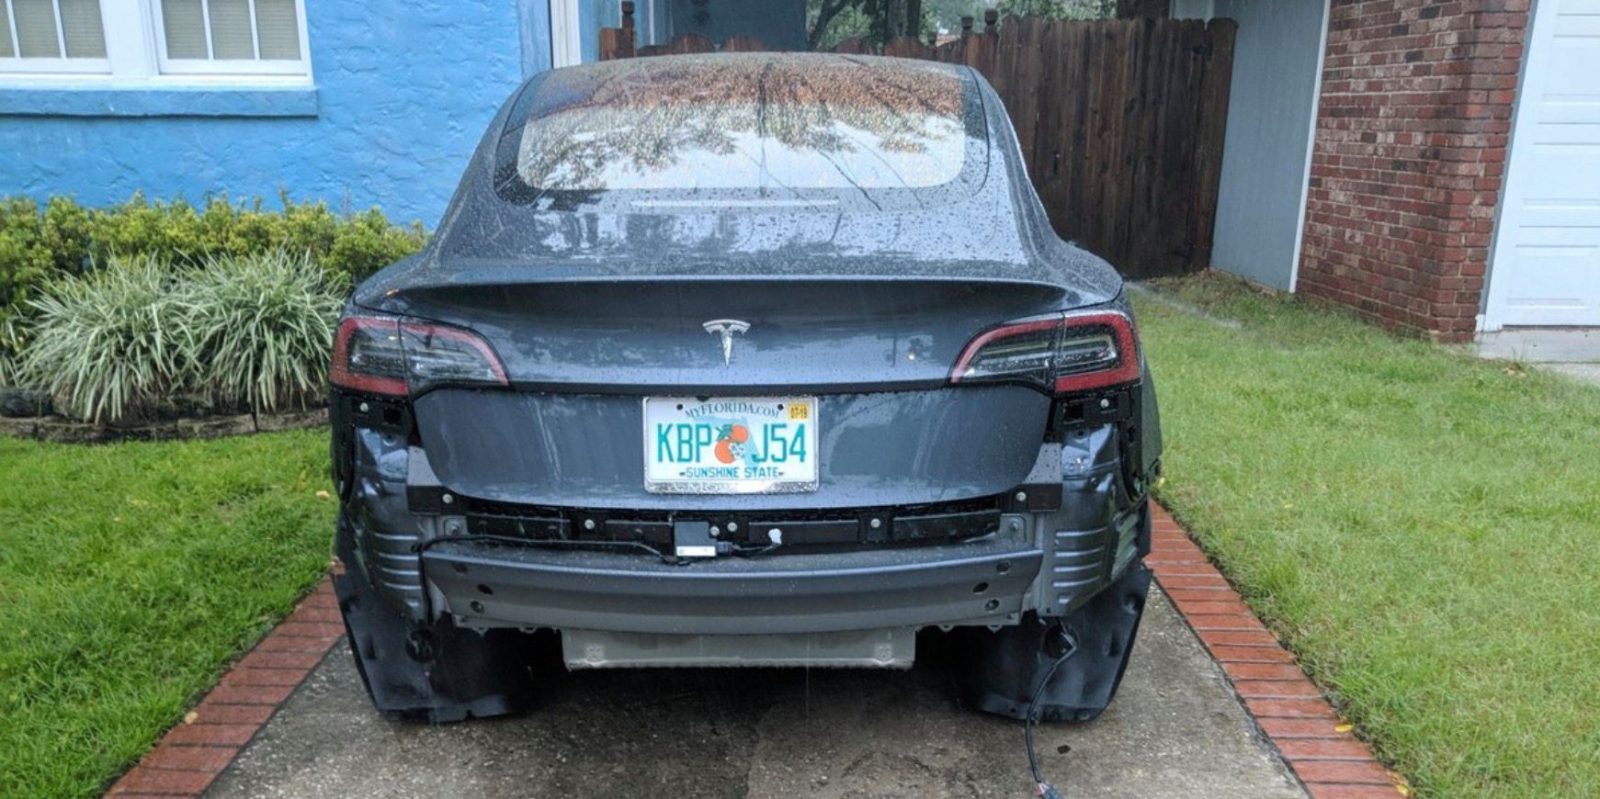 Tesla Investigates Why Bumper Broke Off Two Model 3 Vehicles